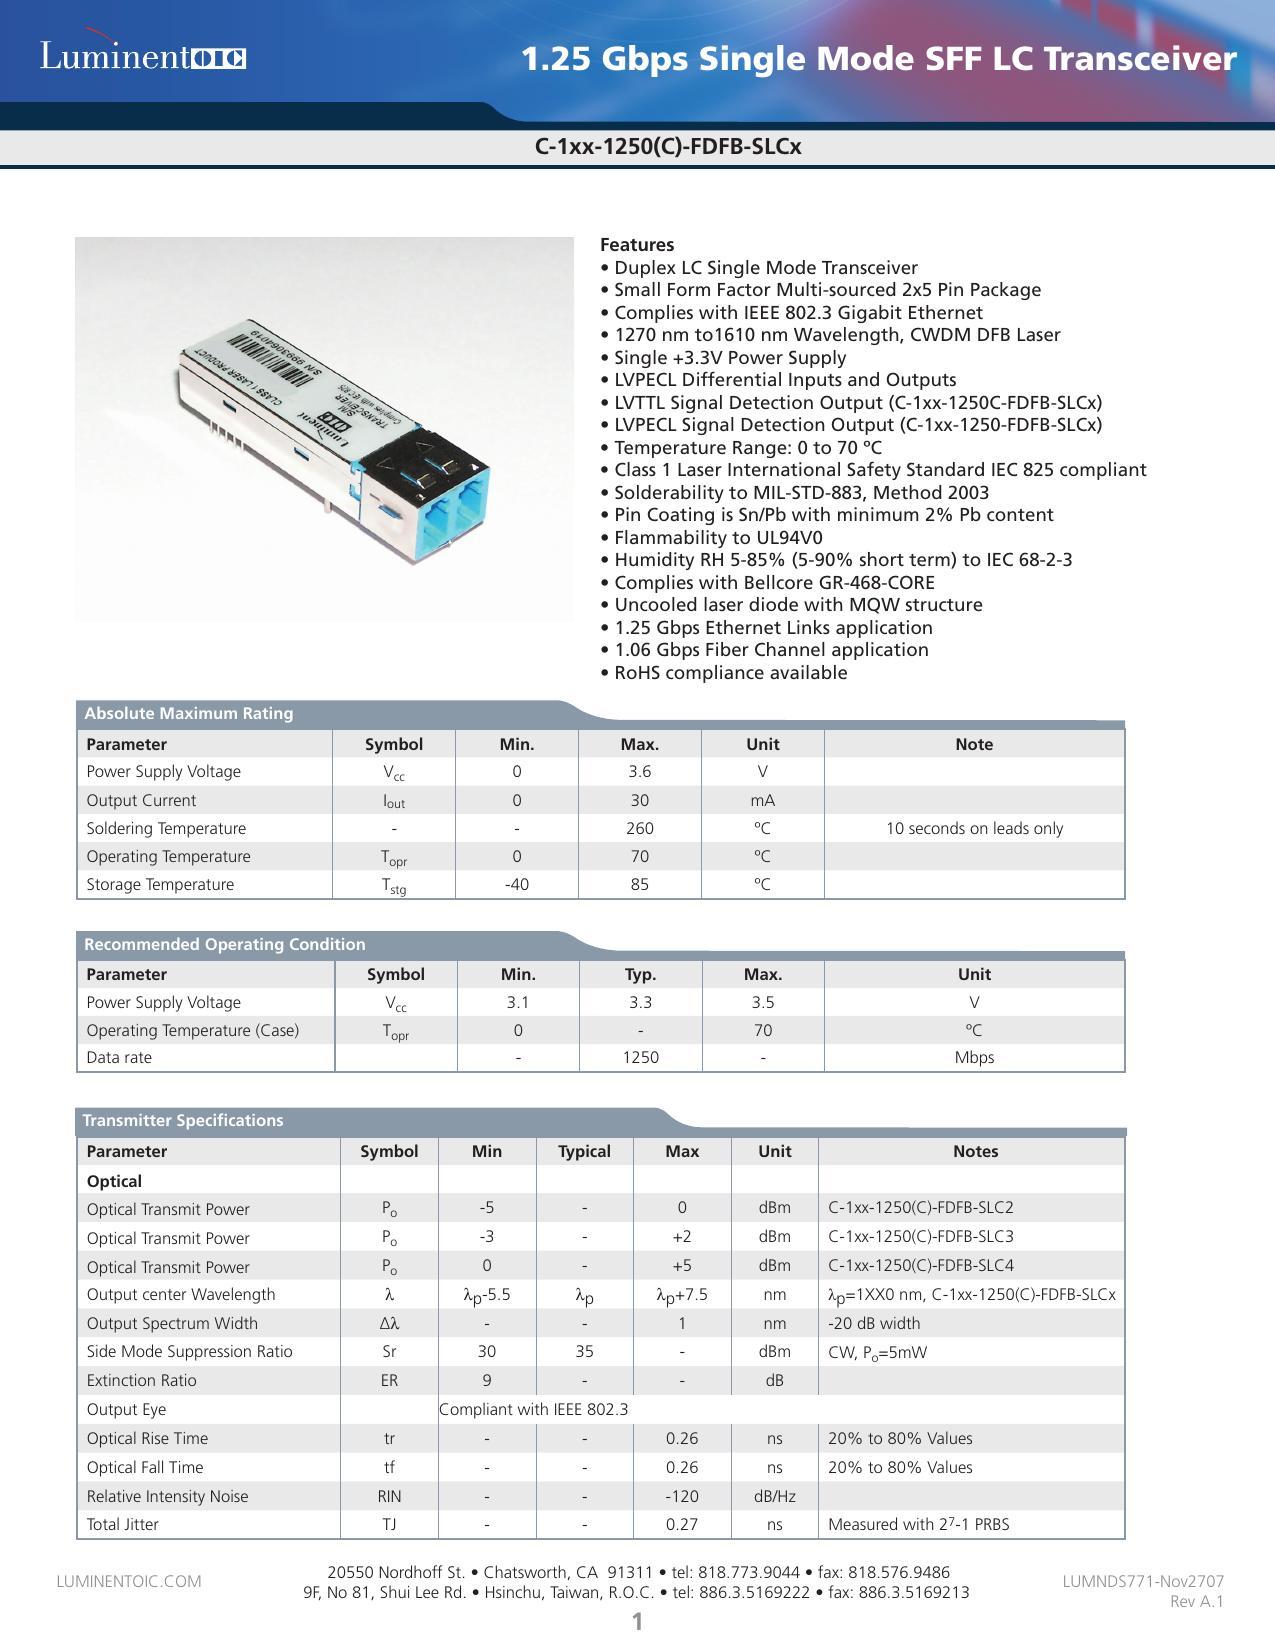 125-gbps-single-mode-sff-lc-transceiver---luminent-c-ixx-1250c-fdfb-slcx-datasheet.pdf